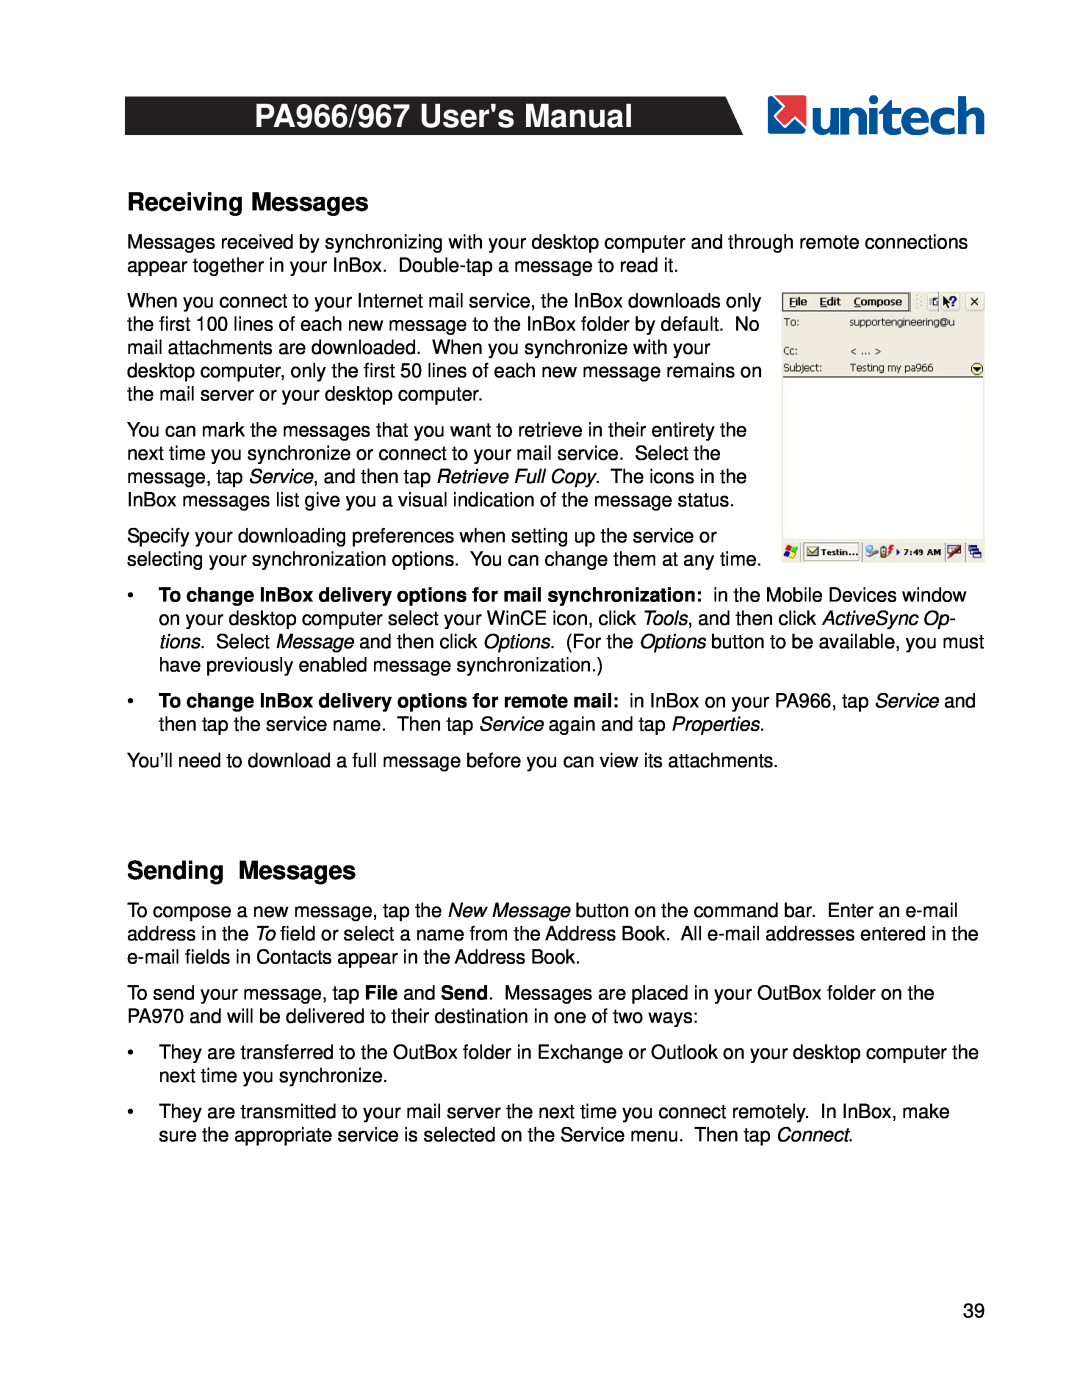 Unitech PA966, PA967 user manual Receiving Messages, Sending Messages 